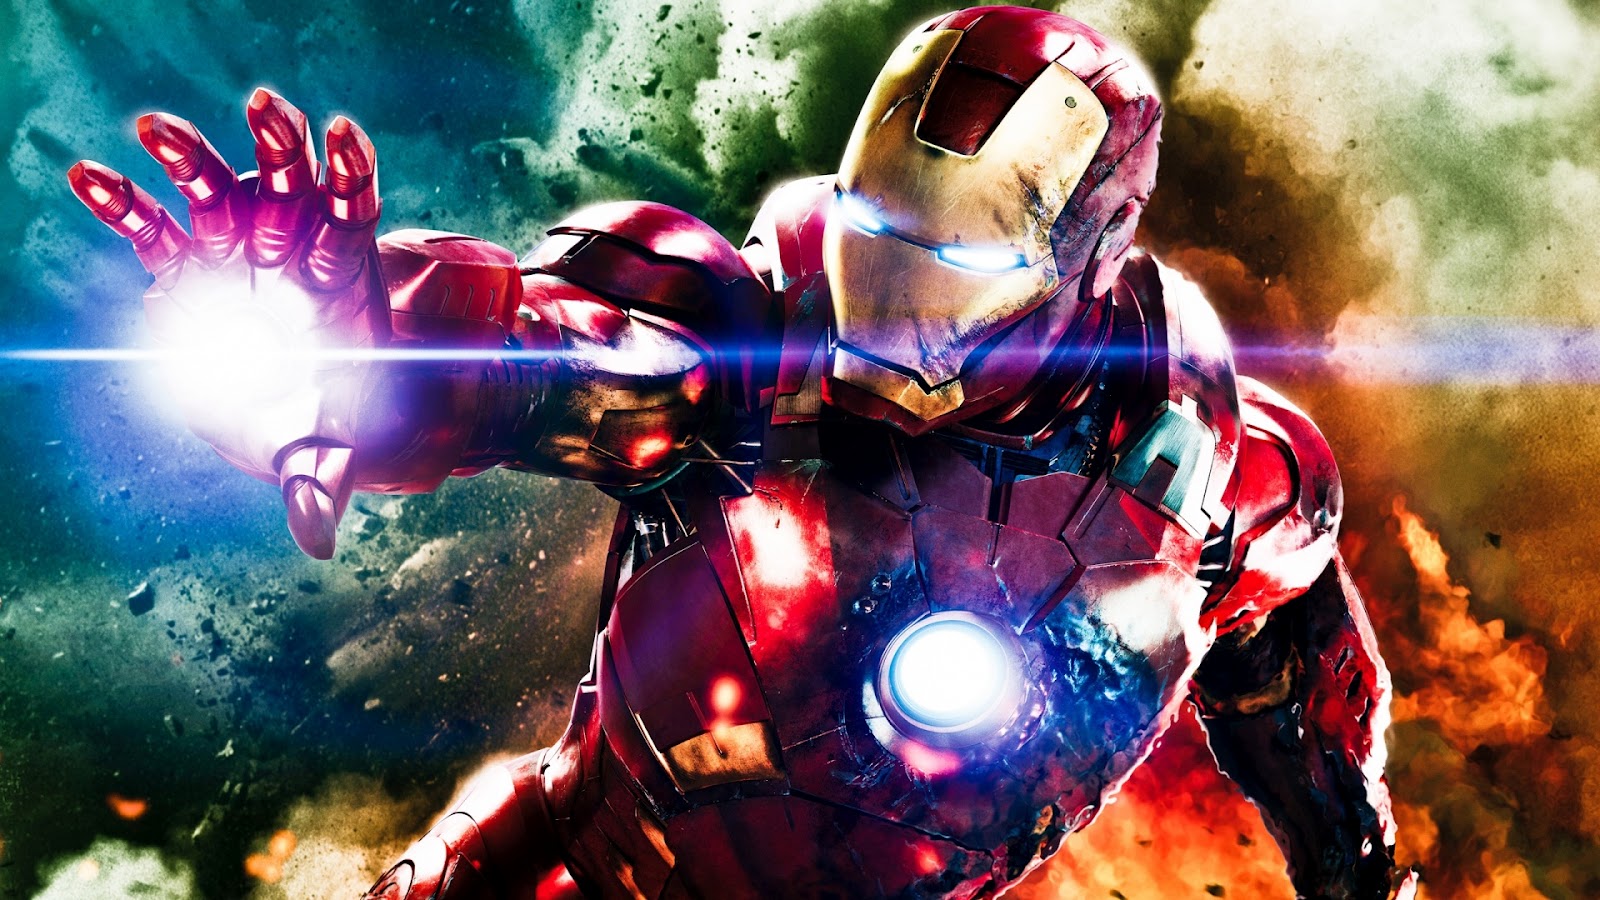 iron man wallpaper hd 1080p,action adventure game,iron man,superhero,fictional character,cg artwork